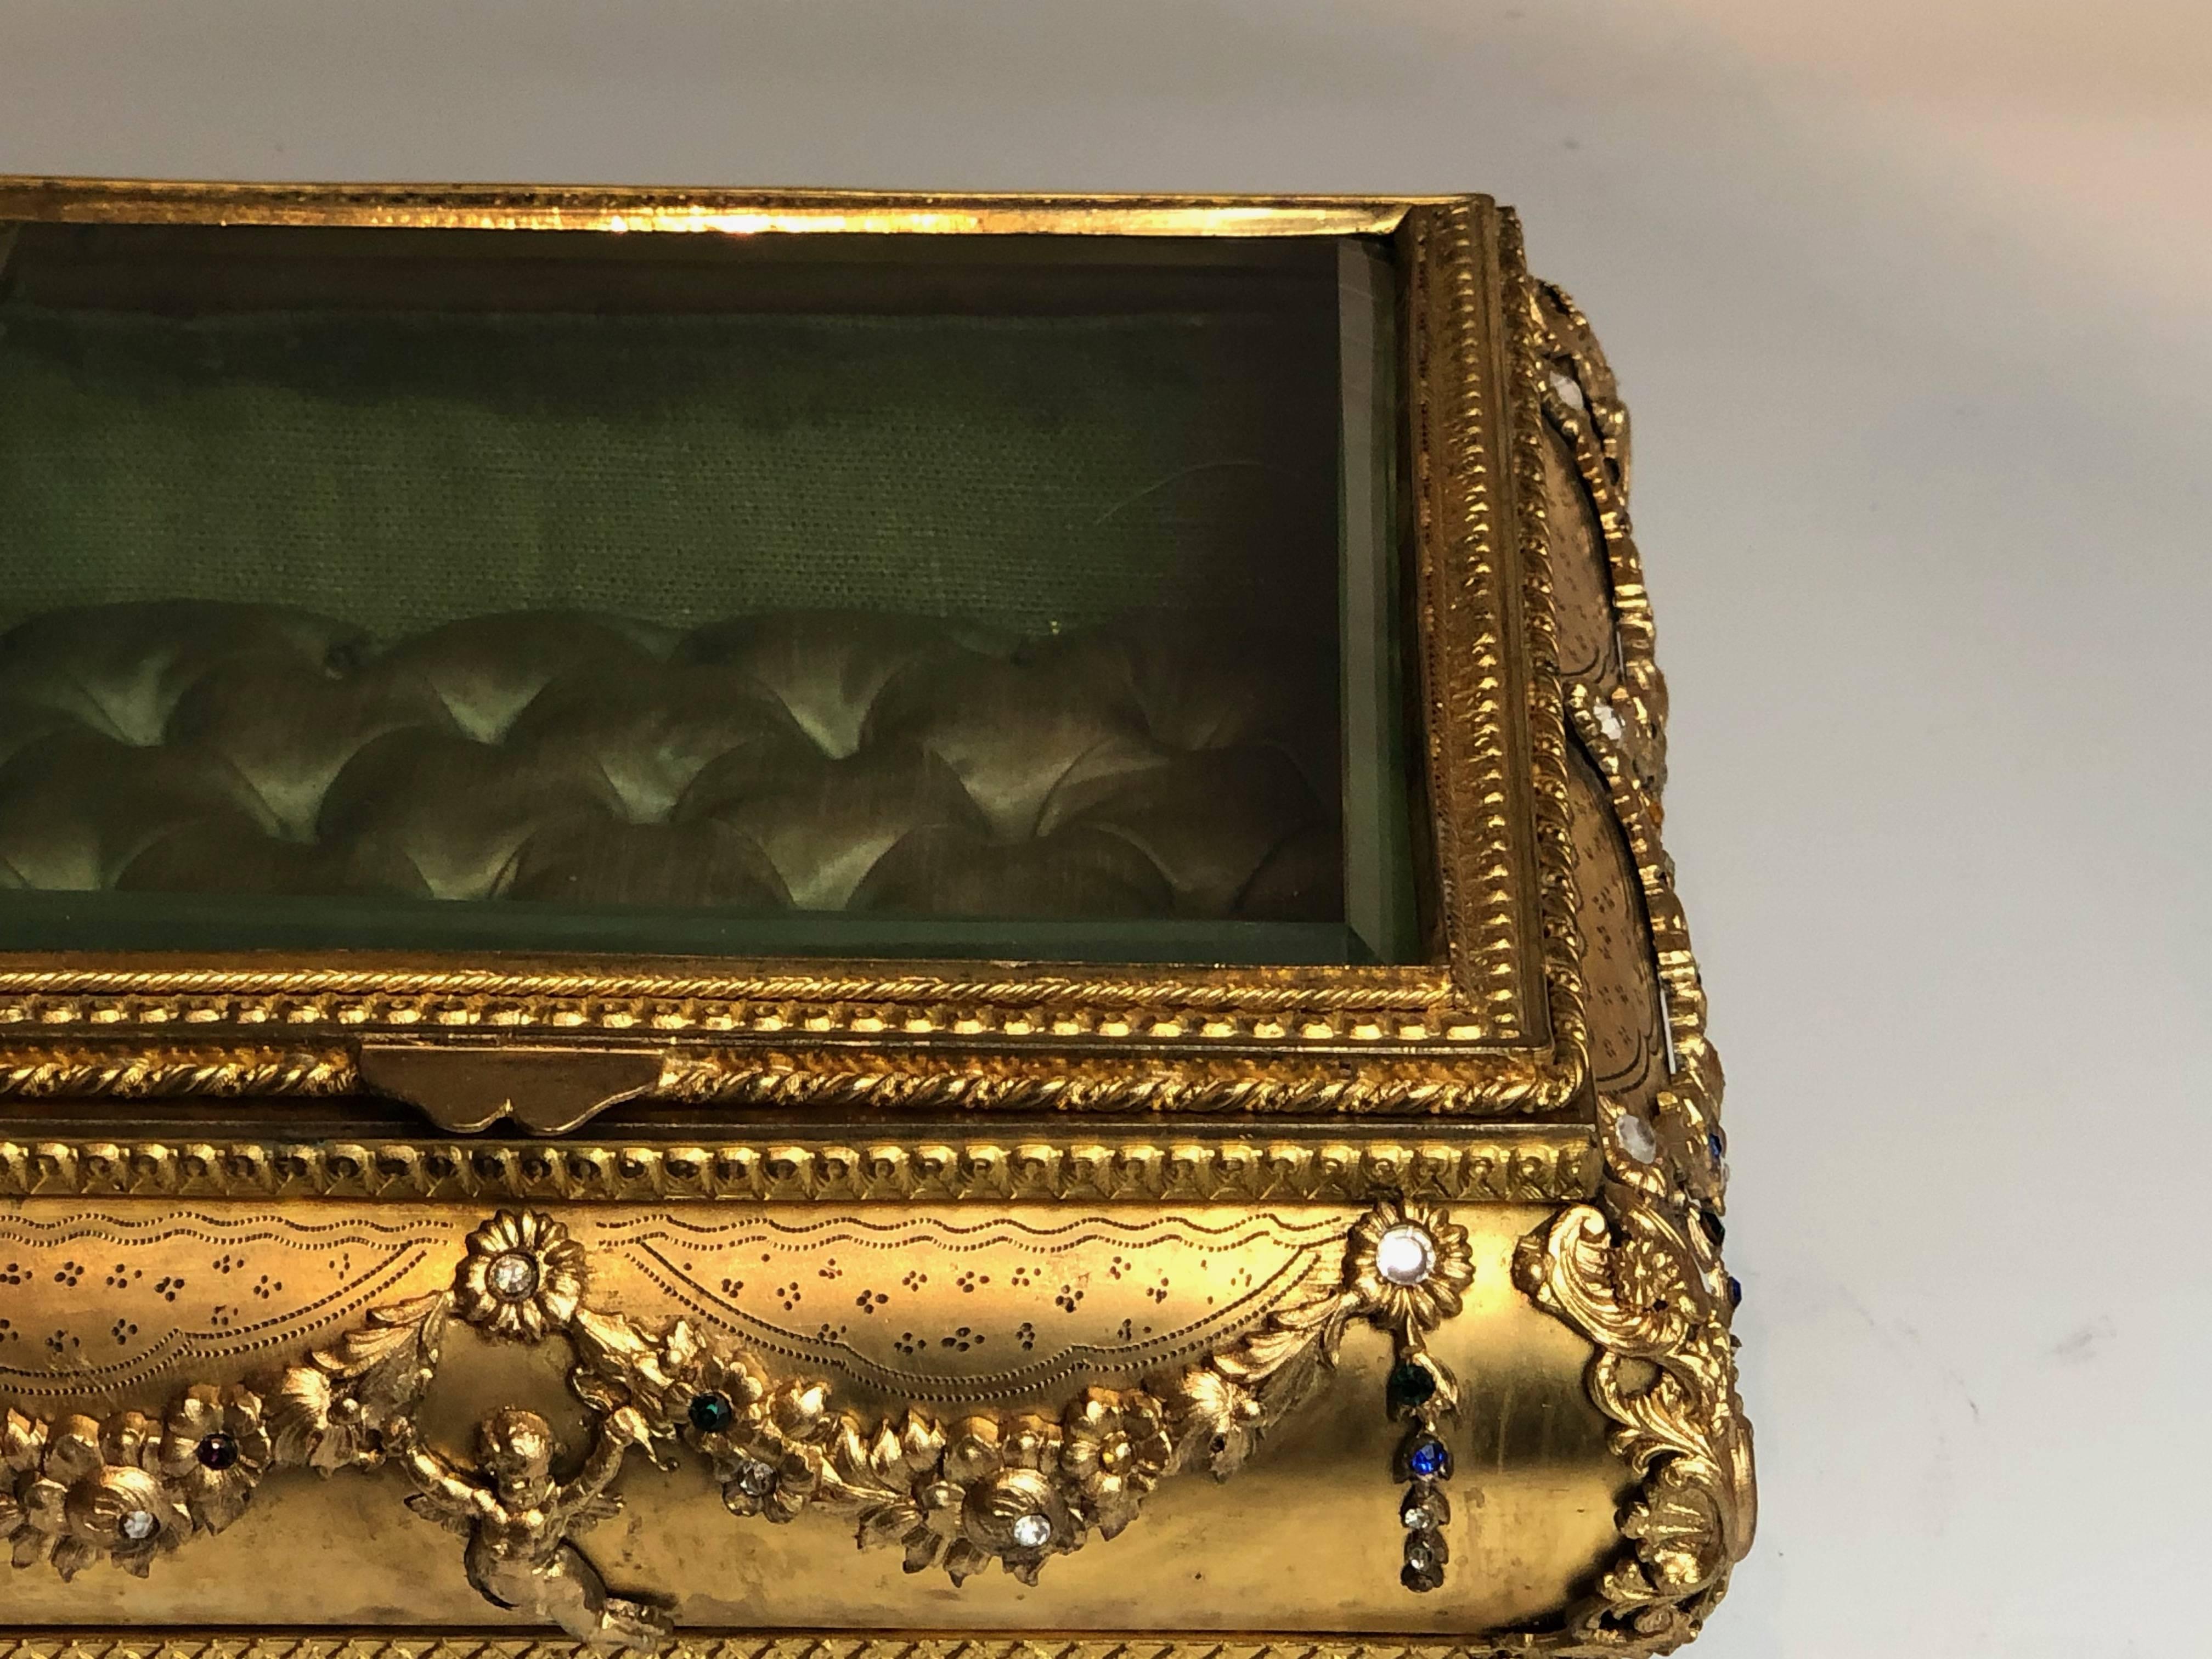 19th Century Antique Bijoux Jewelry Box, Casket Ormolu and Semi-Precious Stones, circa 1880